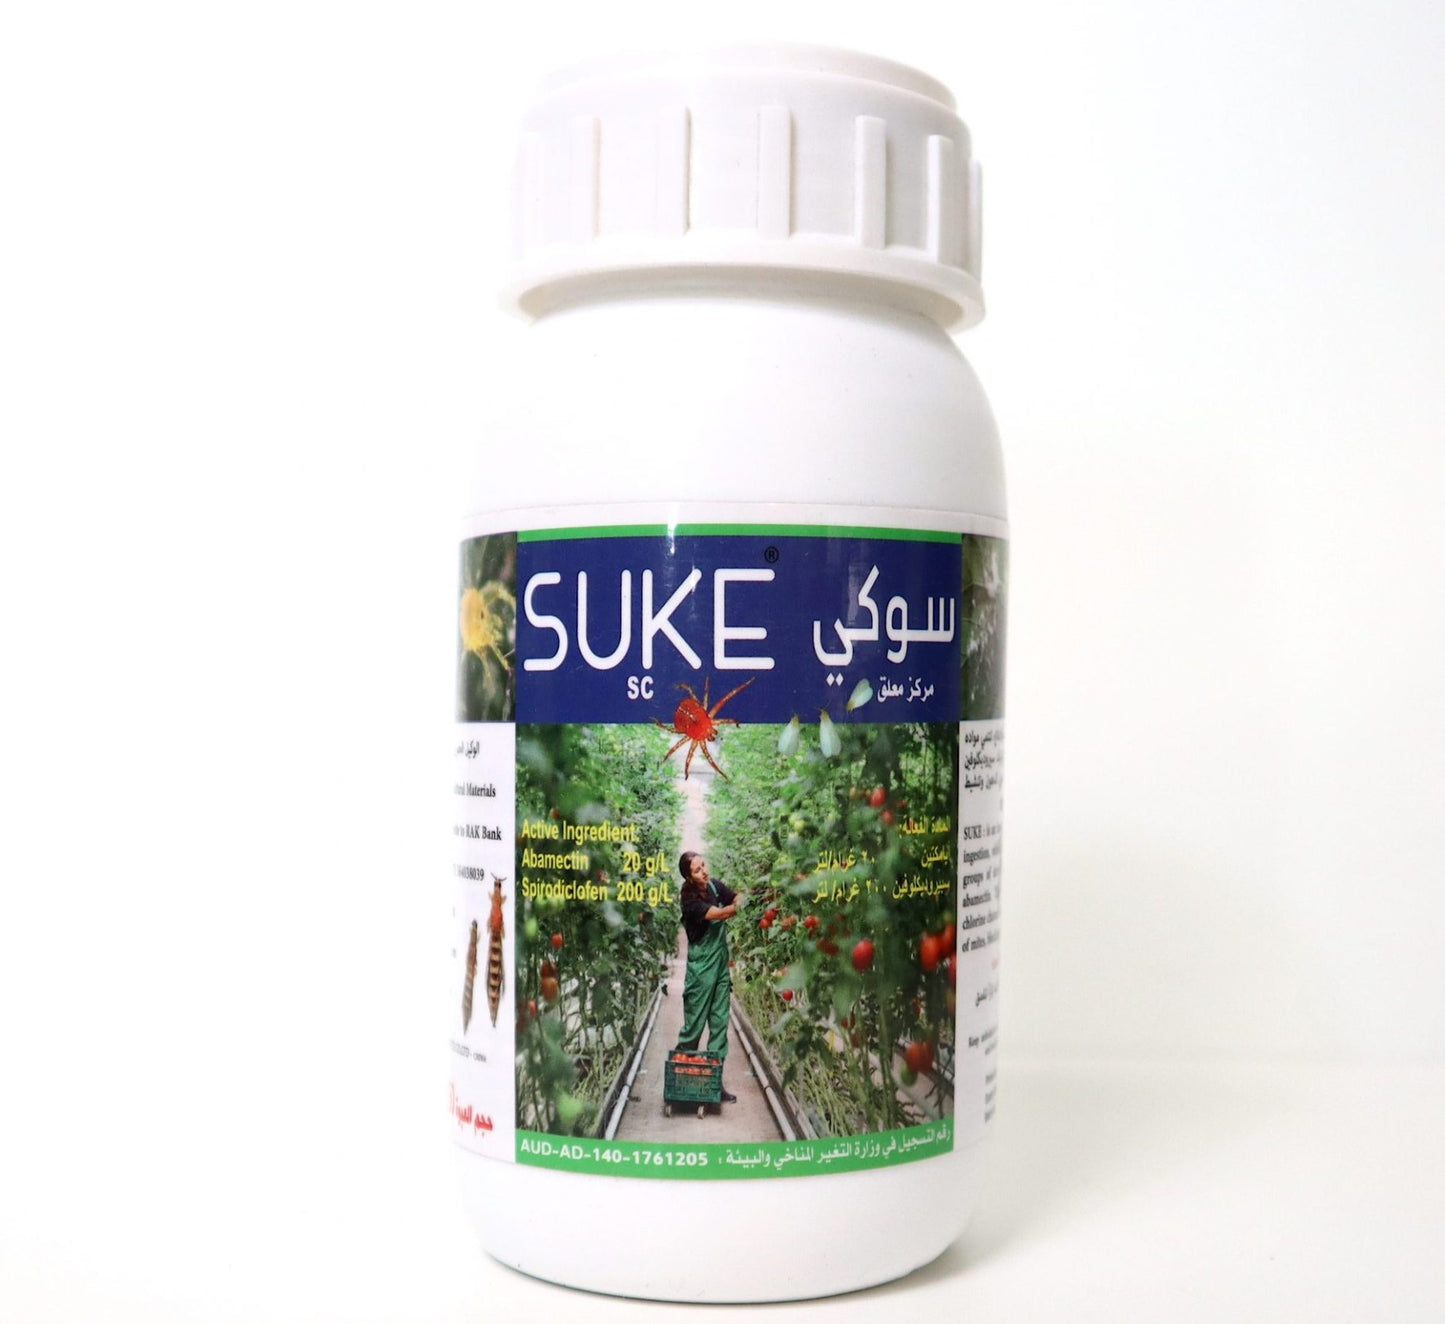 Suke SC "Abamectin + Spirodiclofen" 250ml